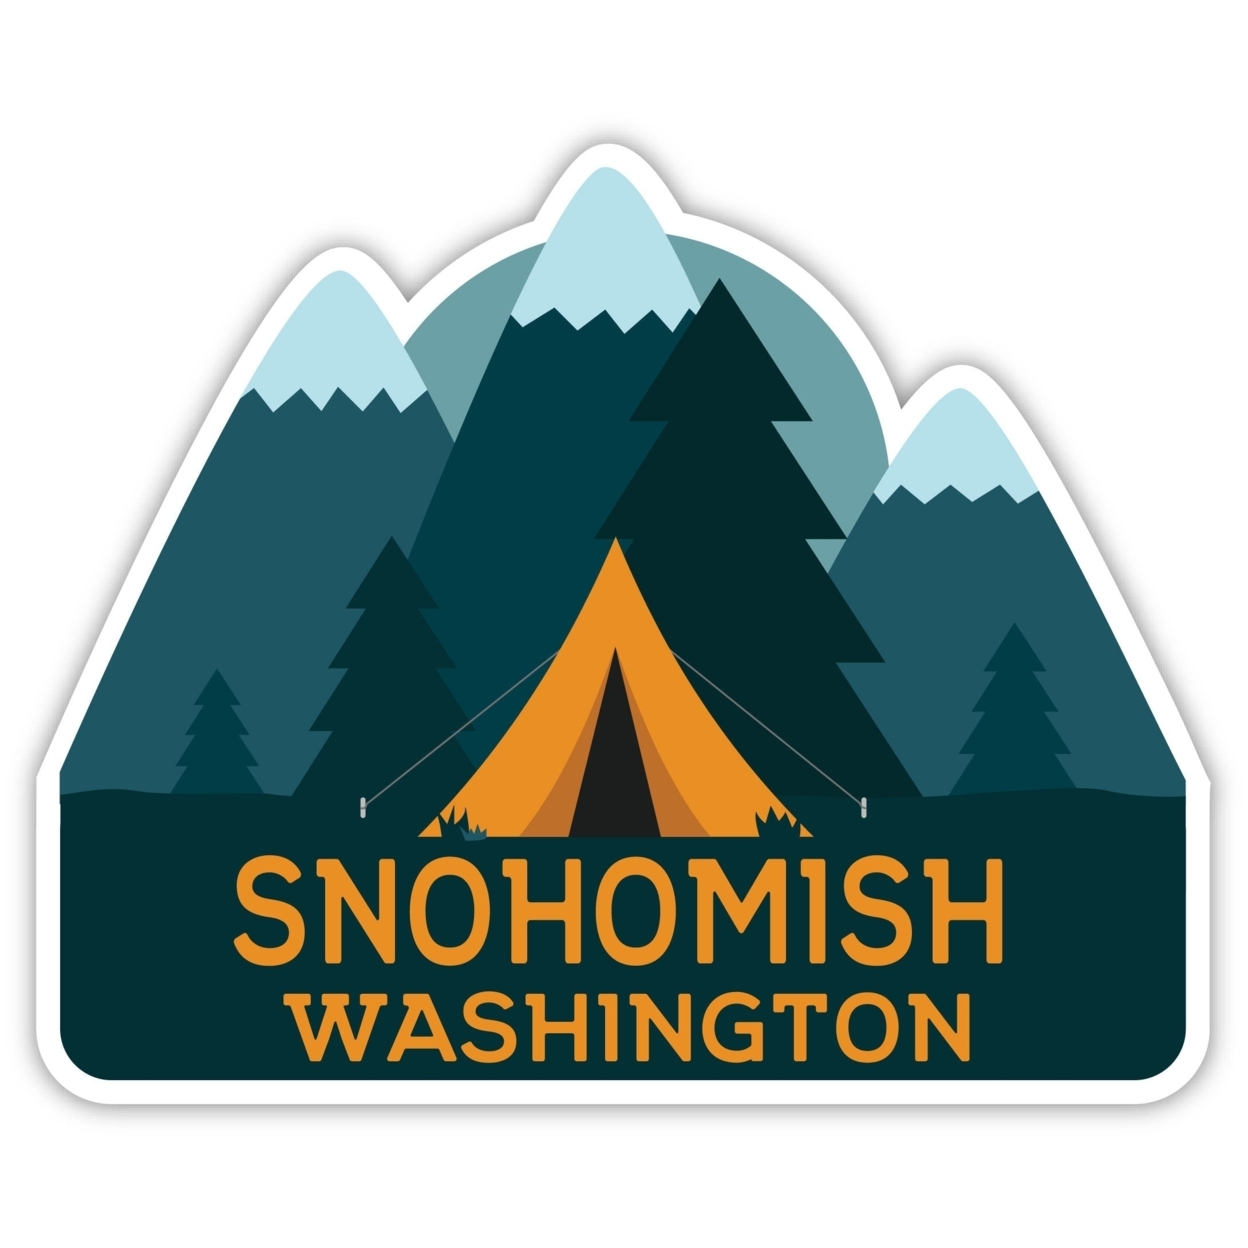 Snohomish Washington Souvenir Decorative Stickers (Choose Theme And Size) - Single Unit, 2-Inch, Camp Life